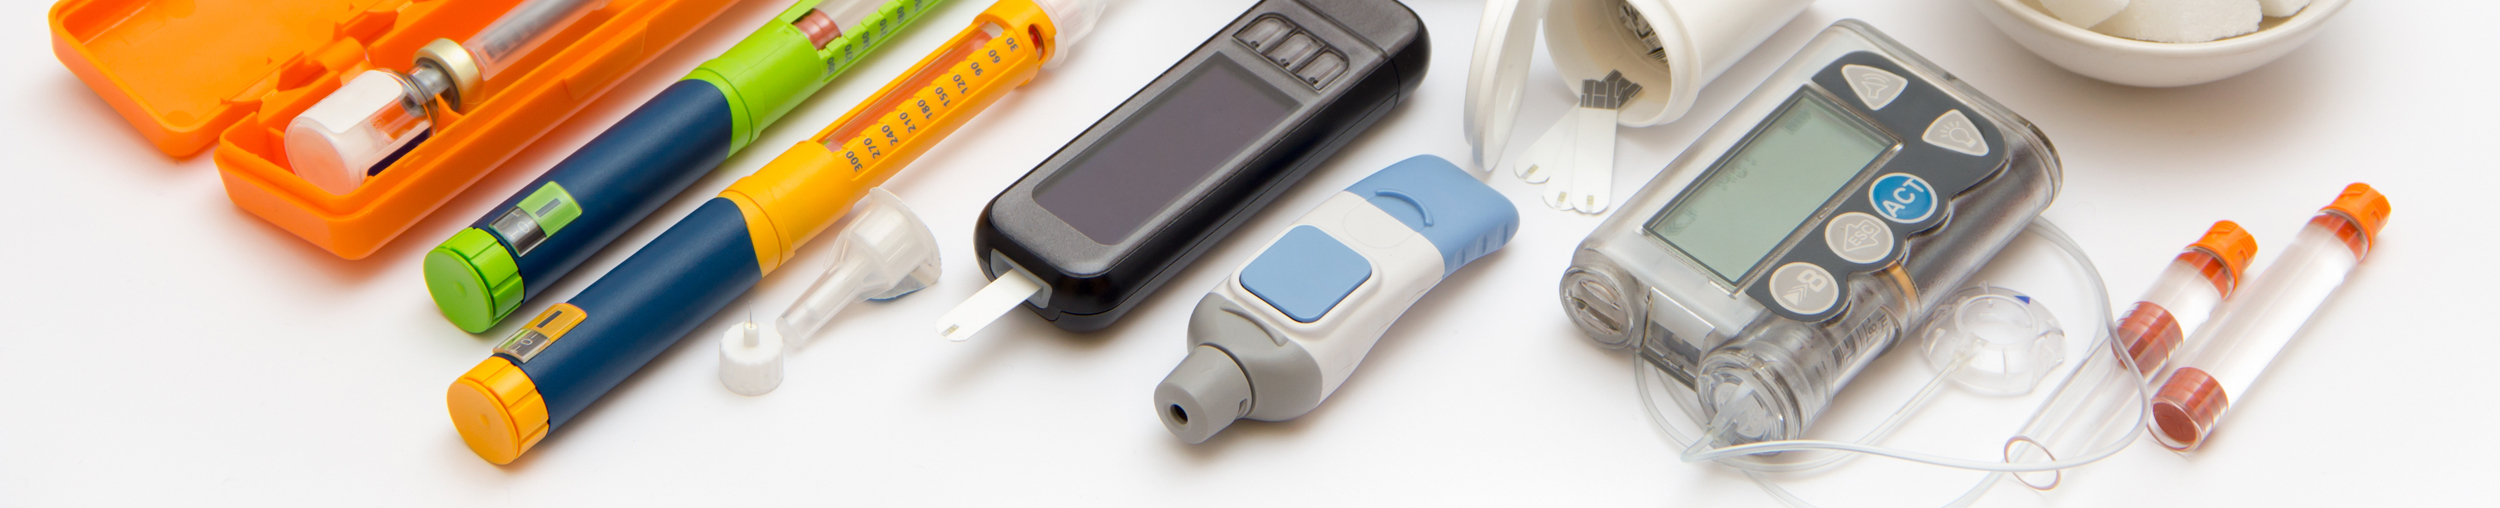 Geräte zur Diabetestherapie